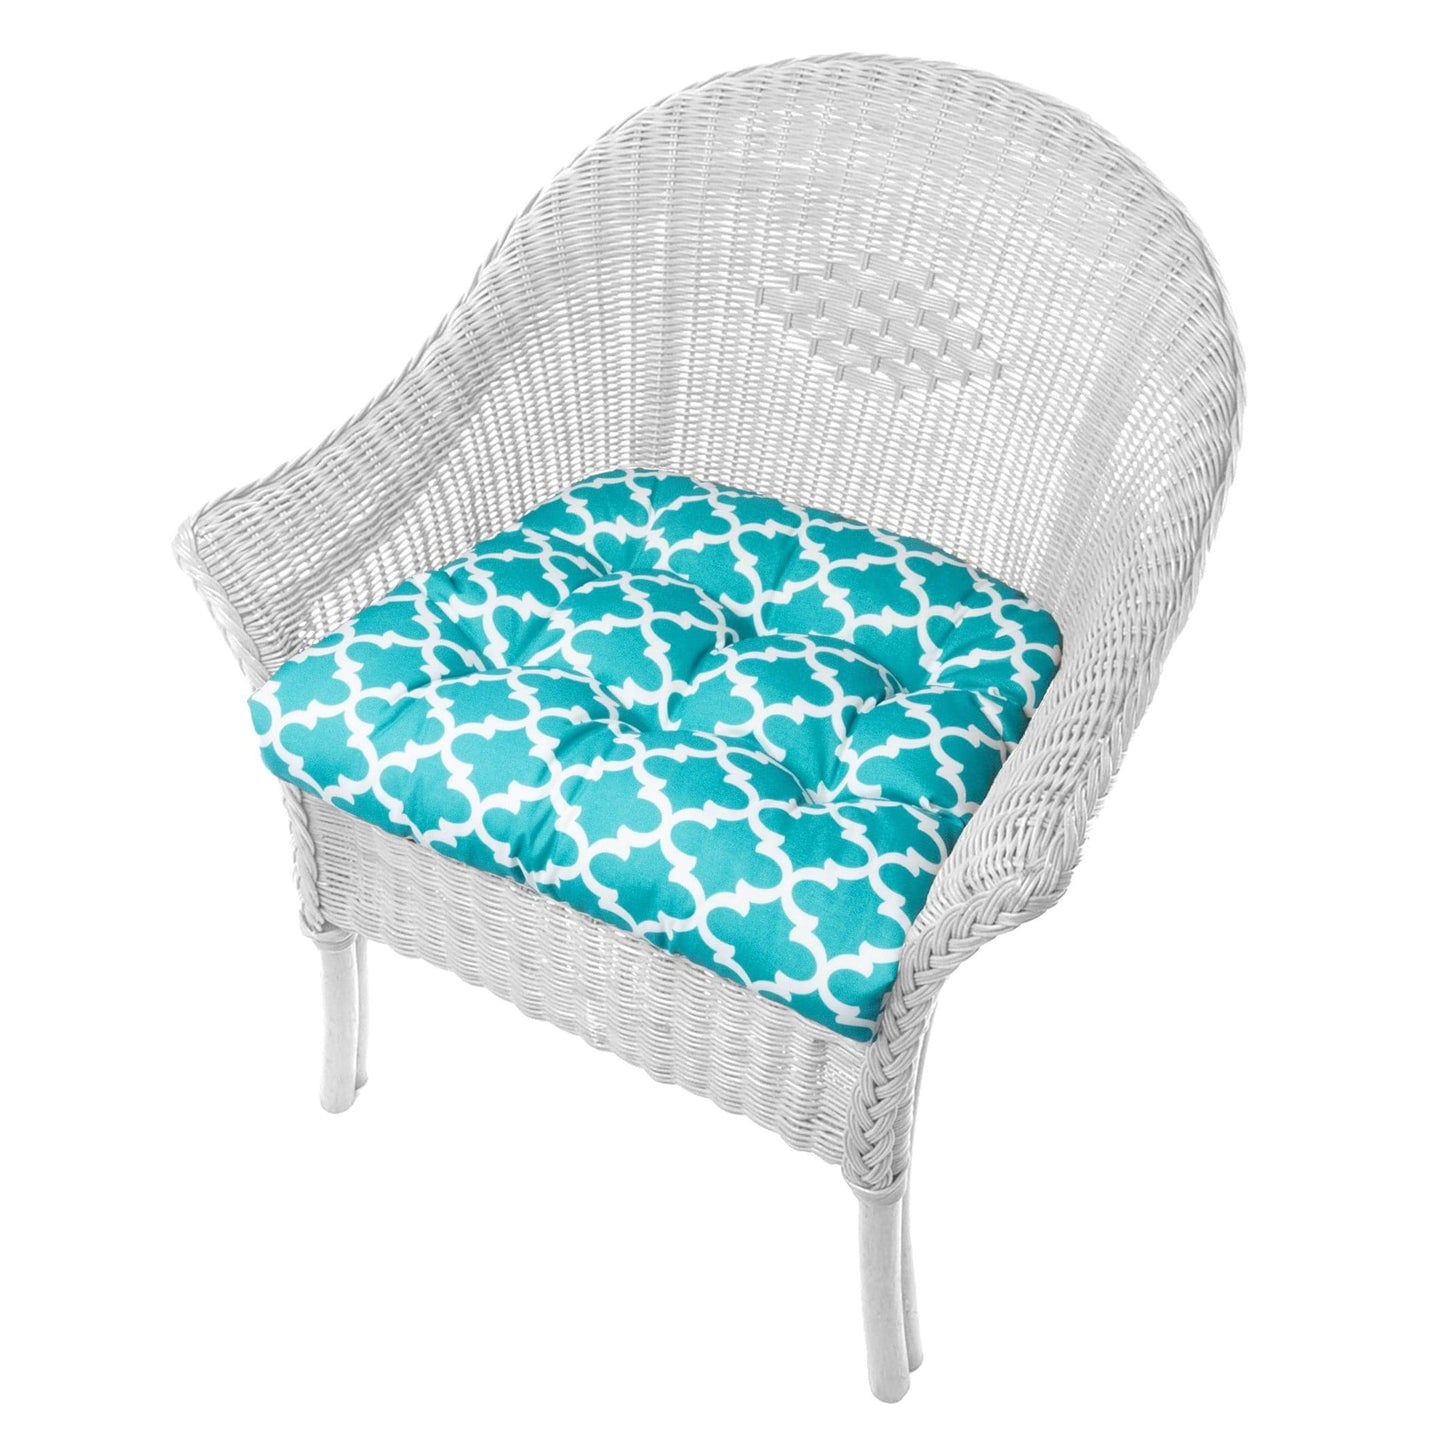 Fulton Aqua Wicker Chair Pads - Barnett Home Décor - Greenish Blue - Teal